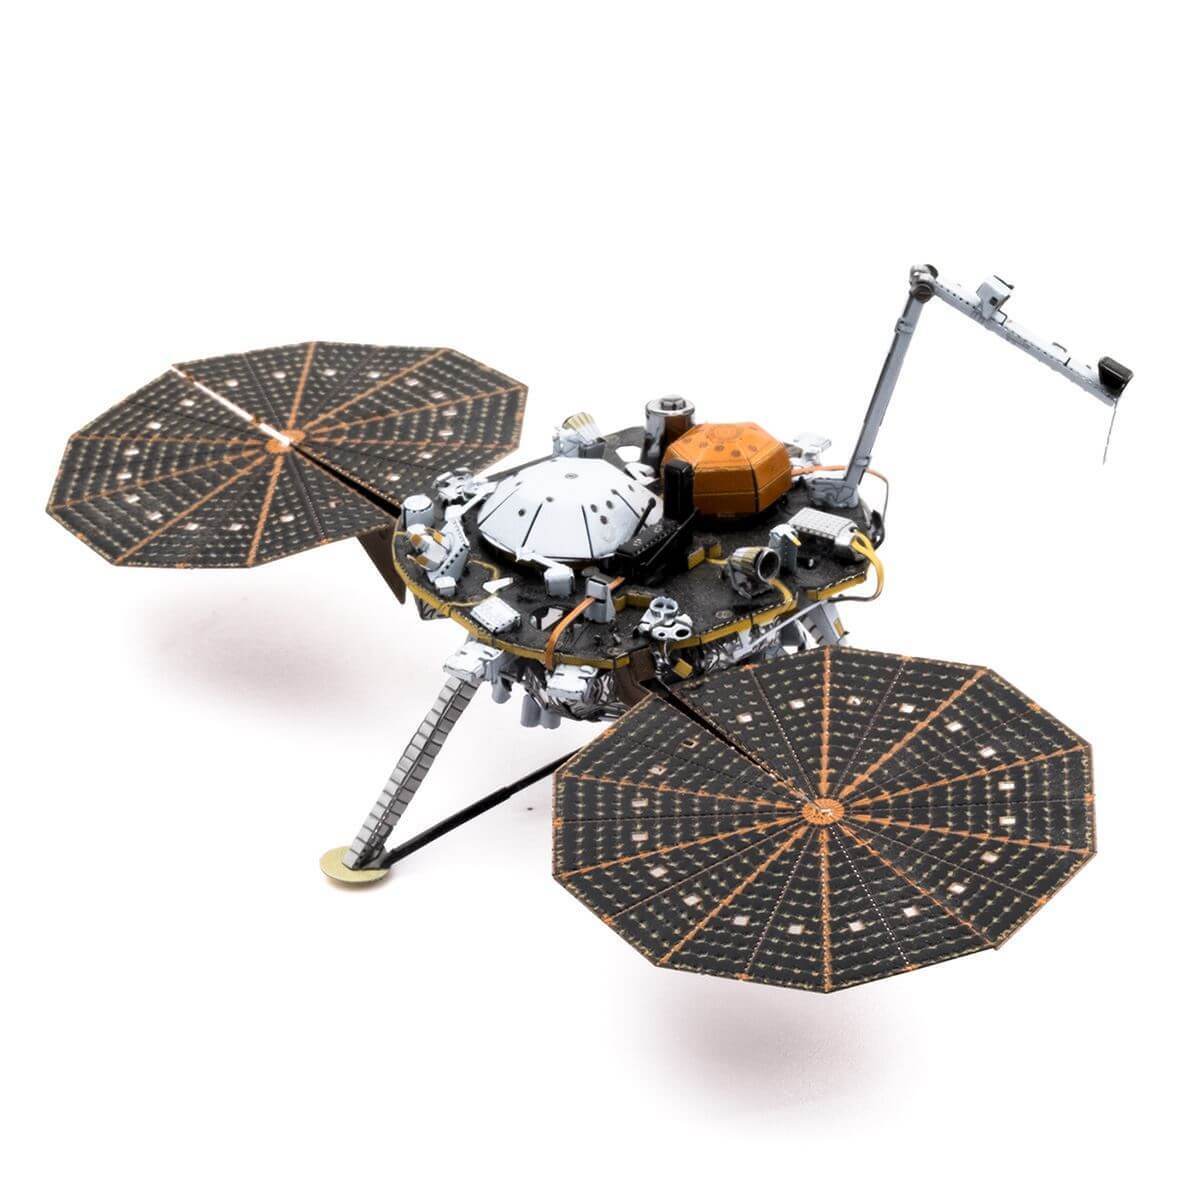 Metal Earth 3D Model Insight Mars Lander additional image